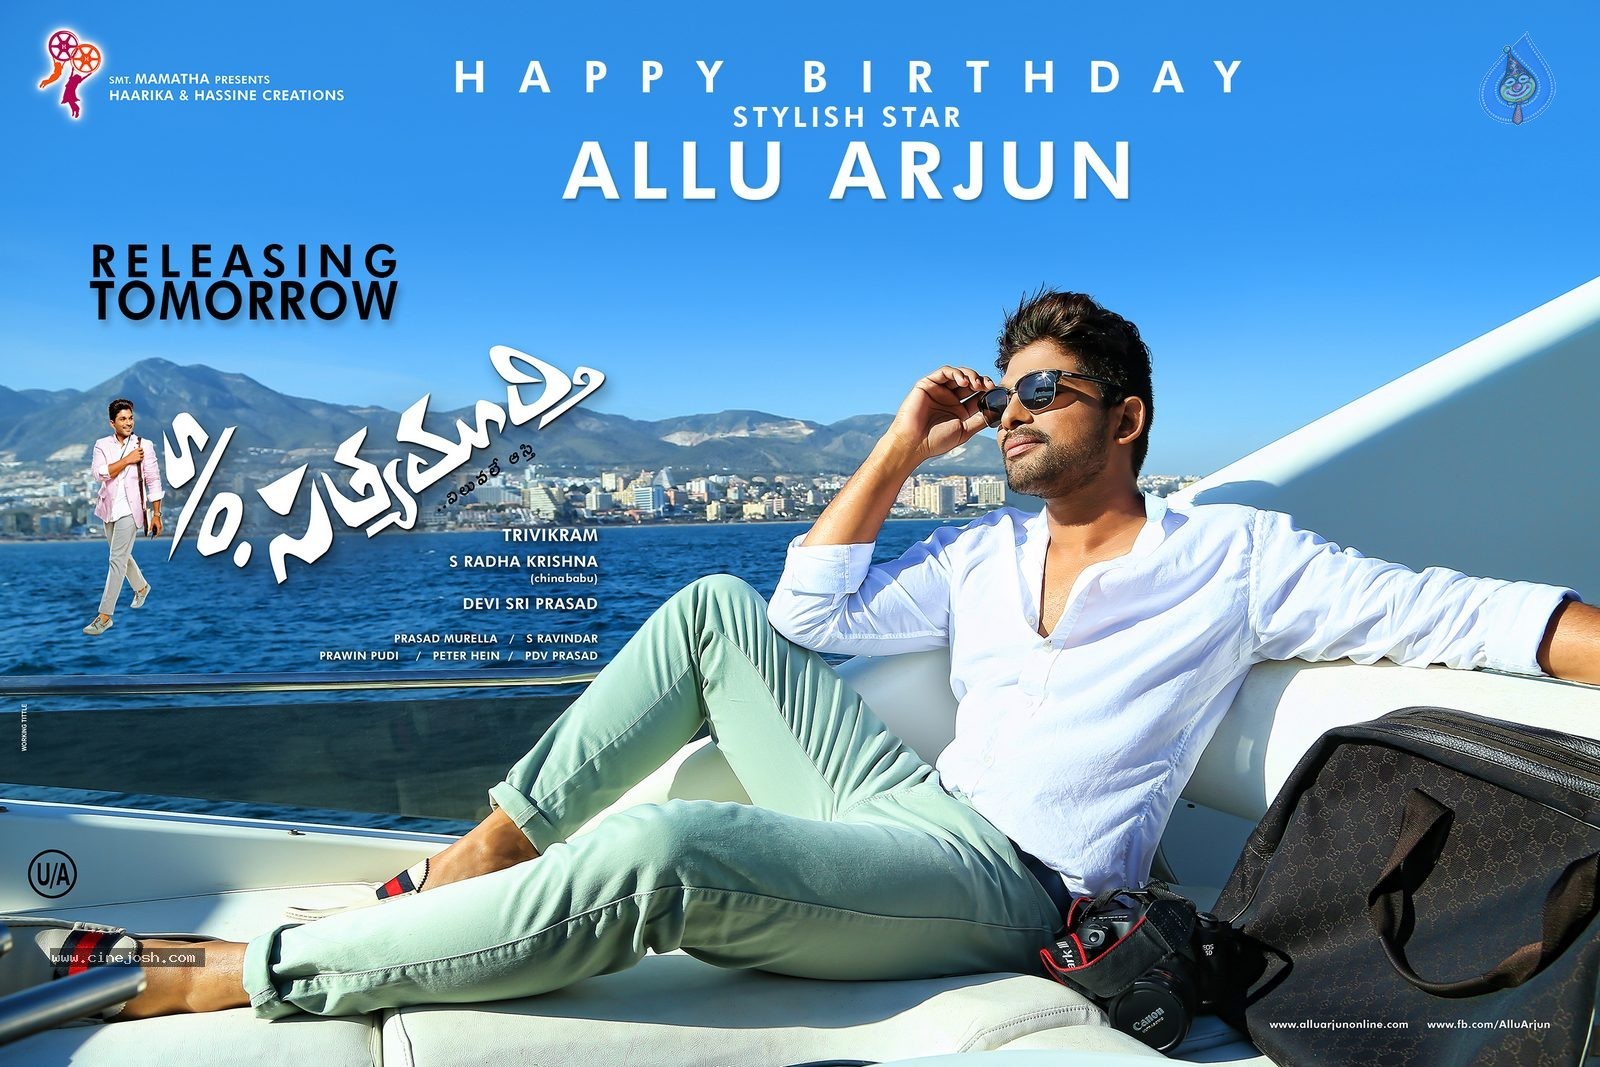 Allu Arjun Birthday Wallpapers - Photo 3 of 3